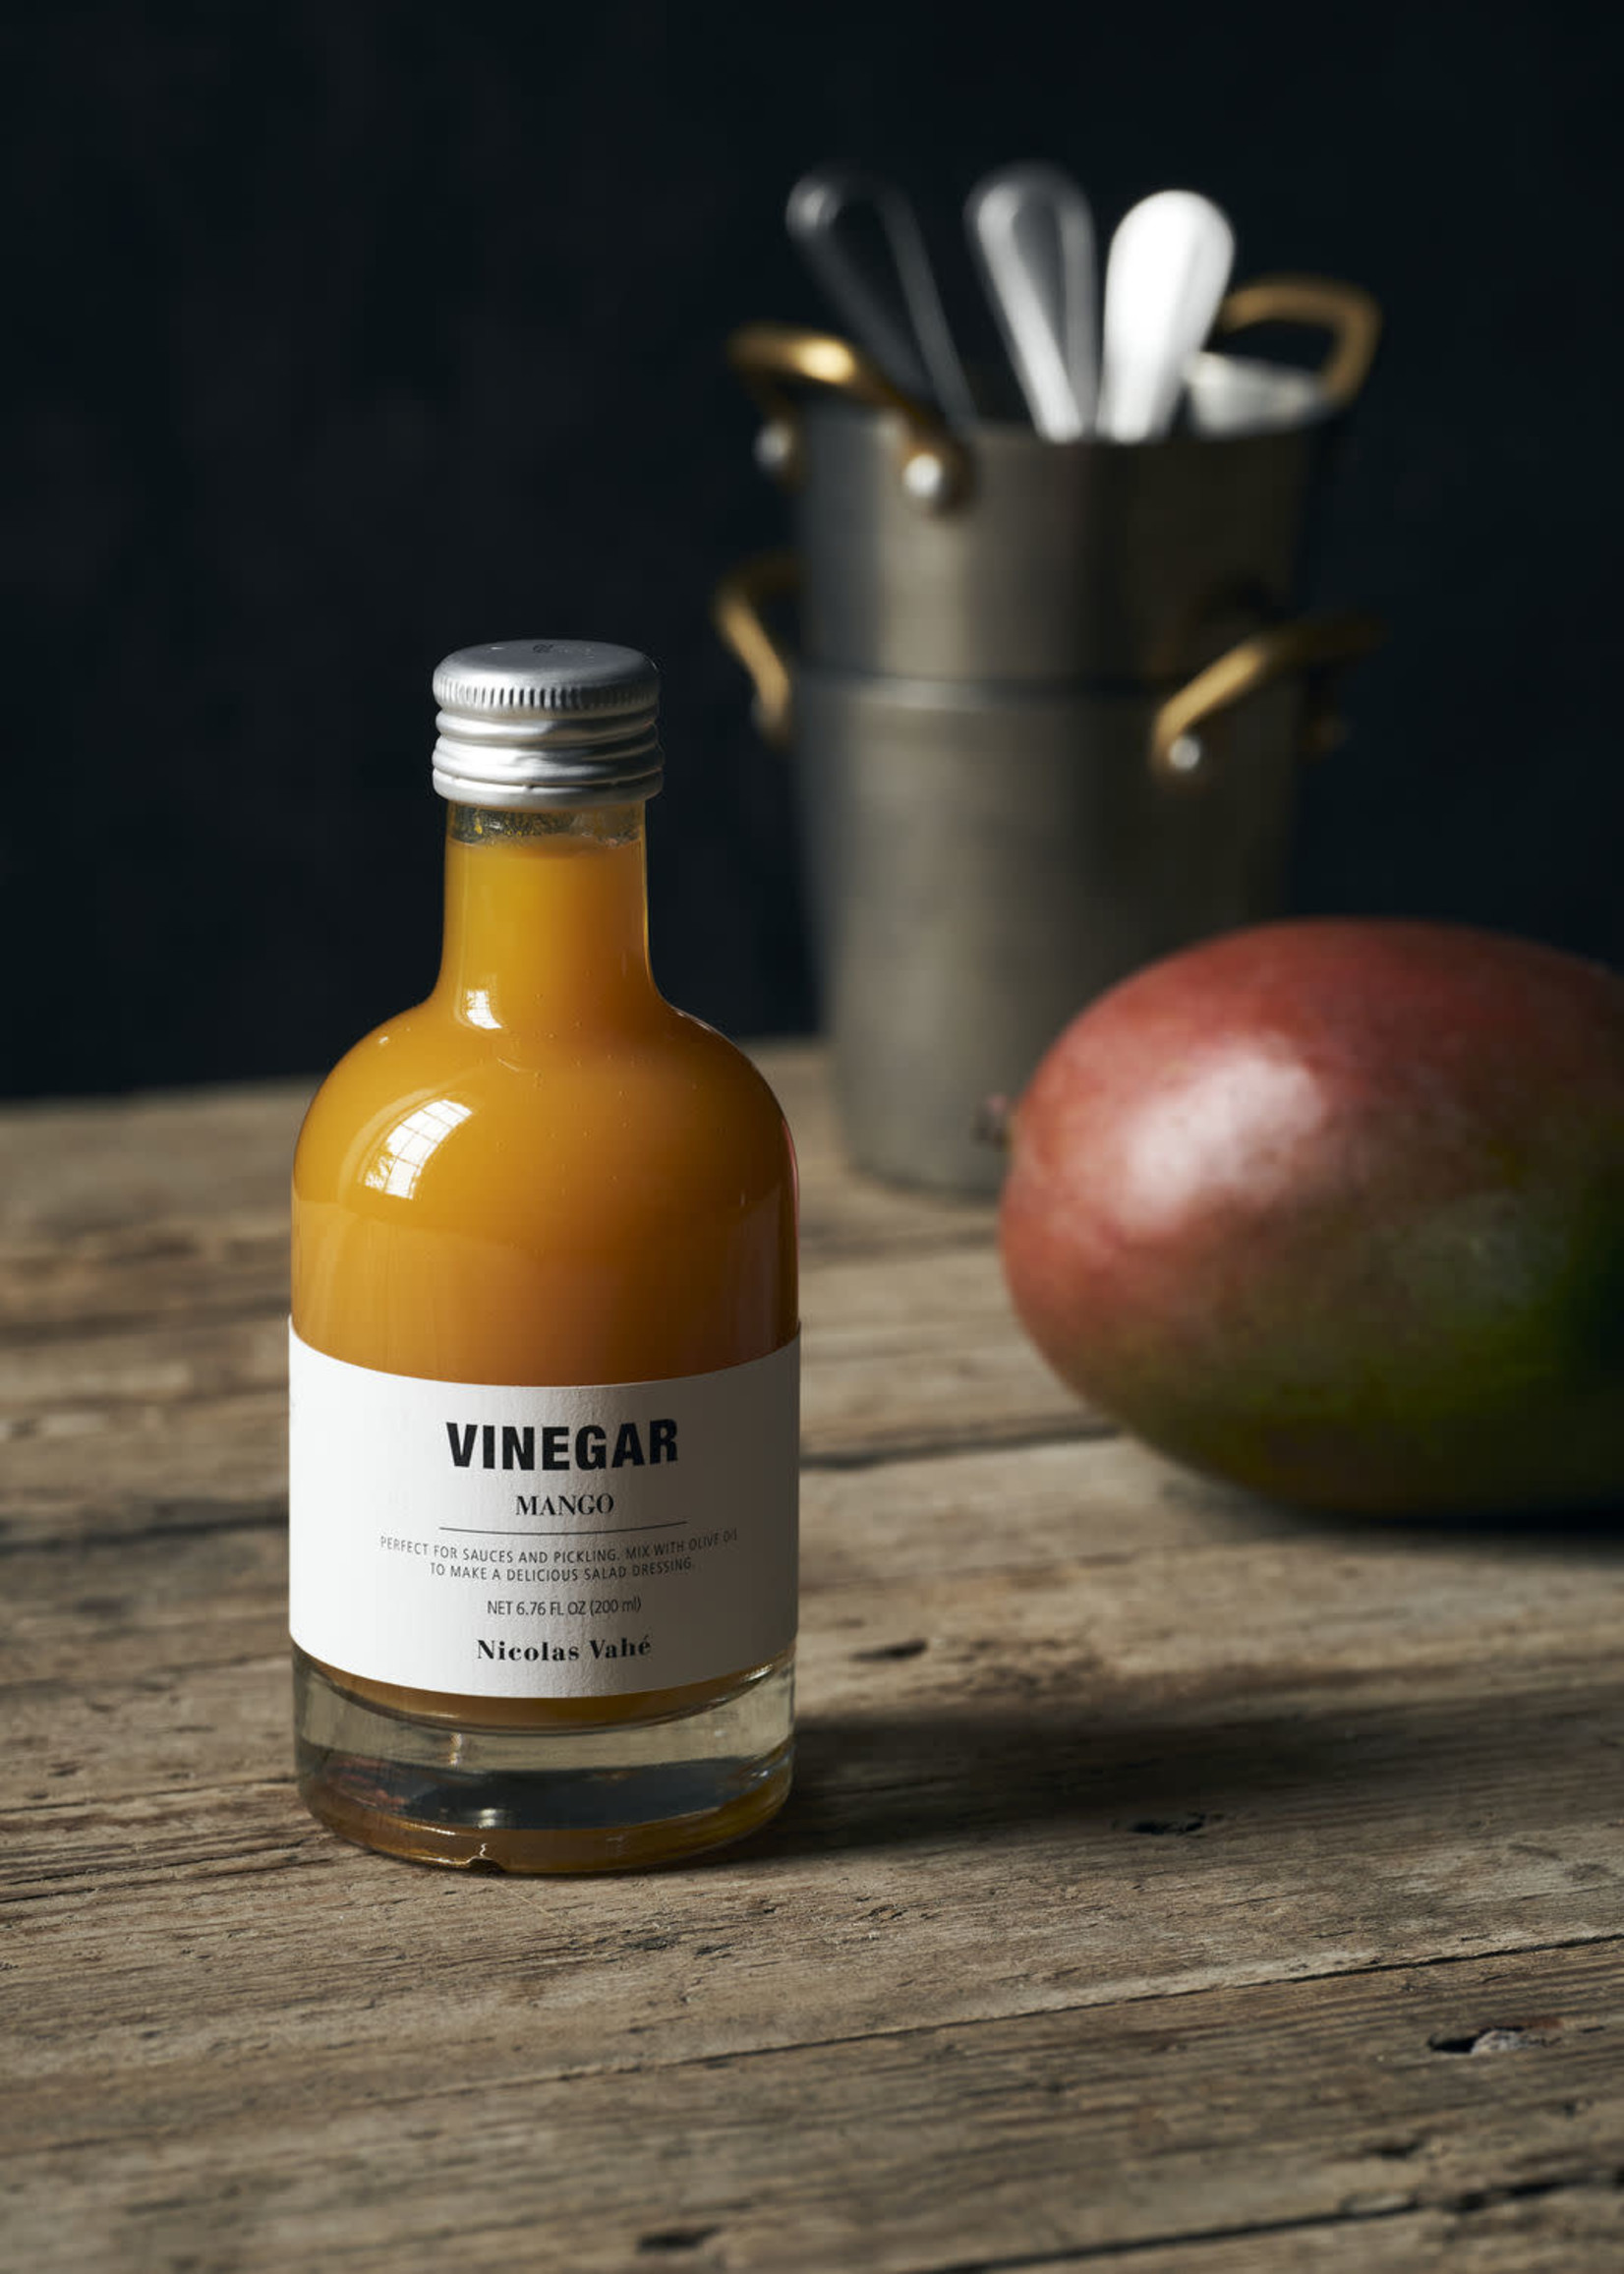 Nicolas Vahe Society of Lifestyle Vinegar - Mango - 6.76 fl oz (200ml)